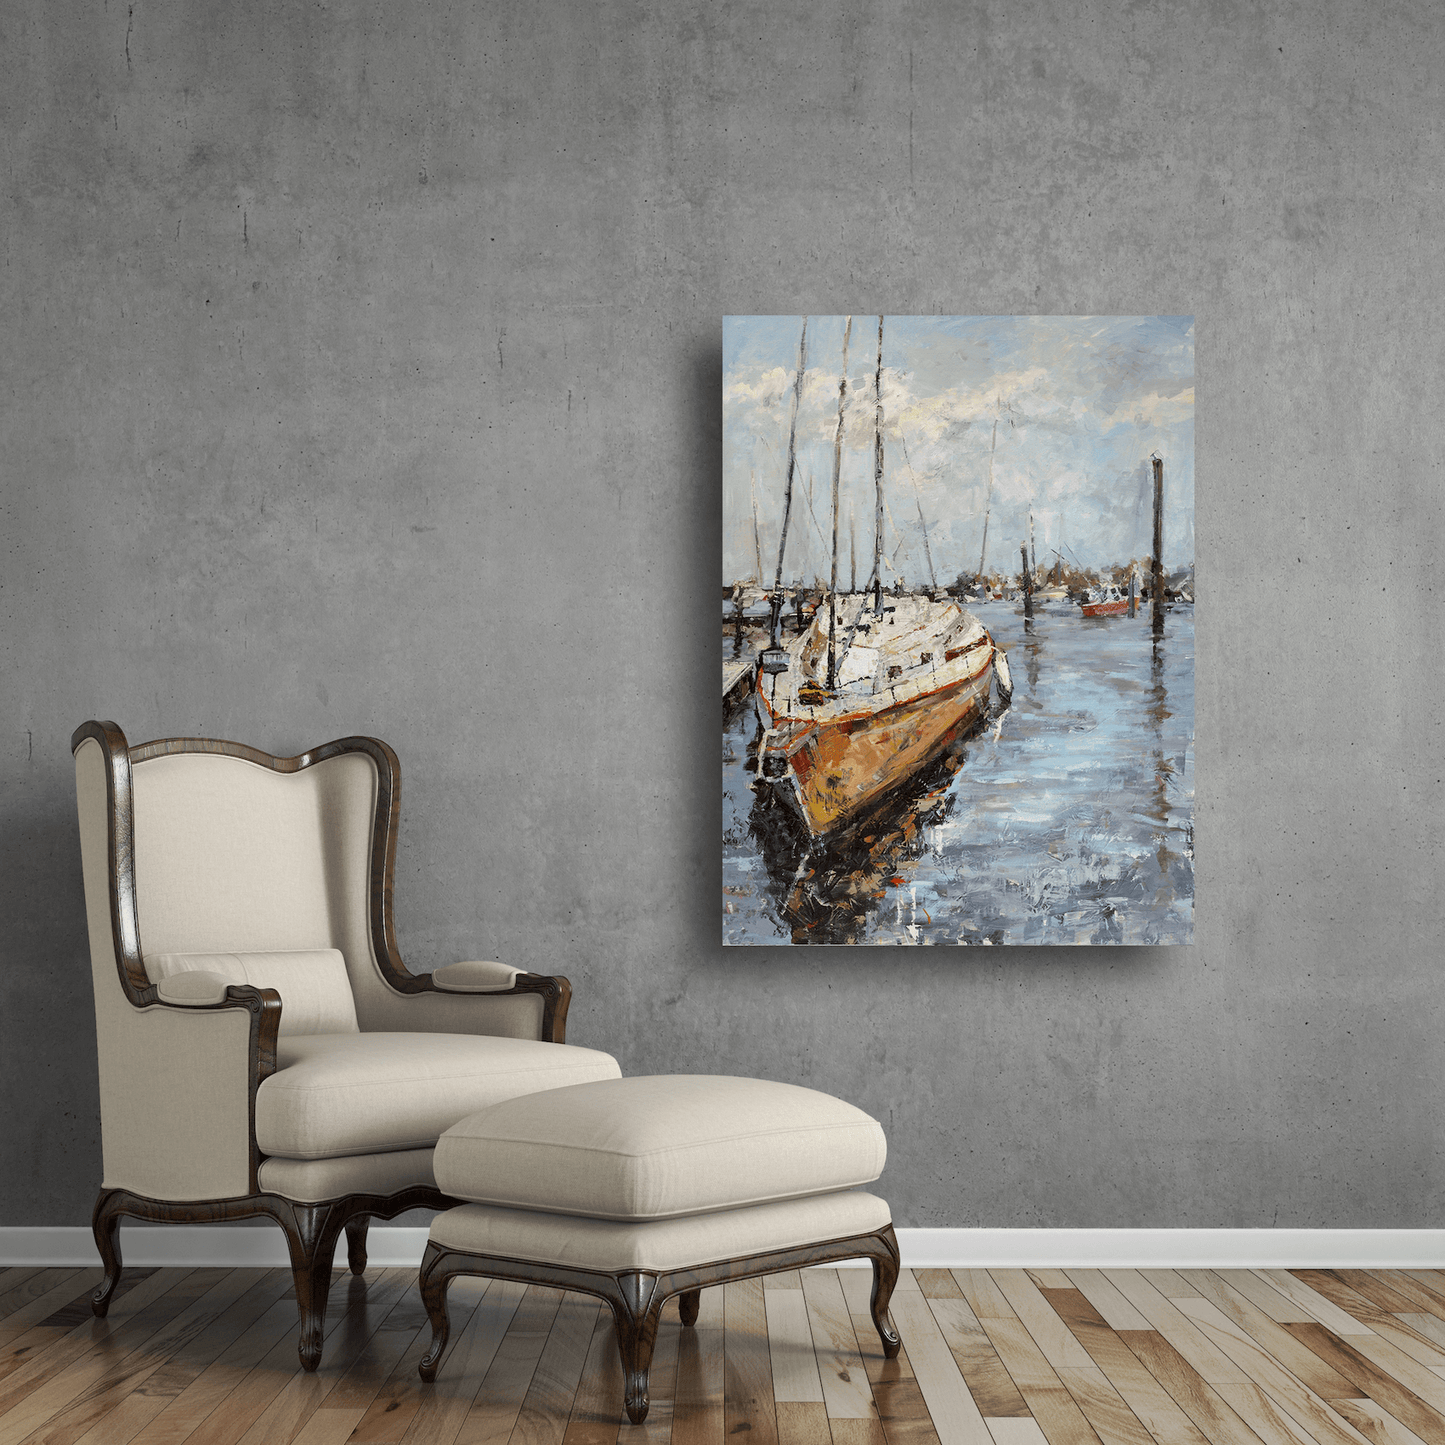 Let Go and Sail Artist Enhanced Canvas Print